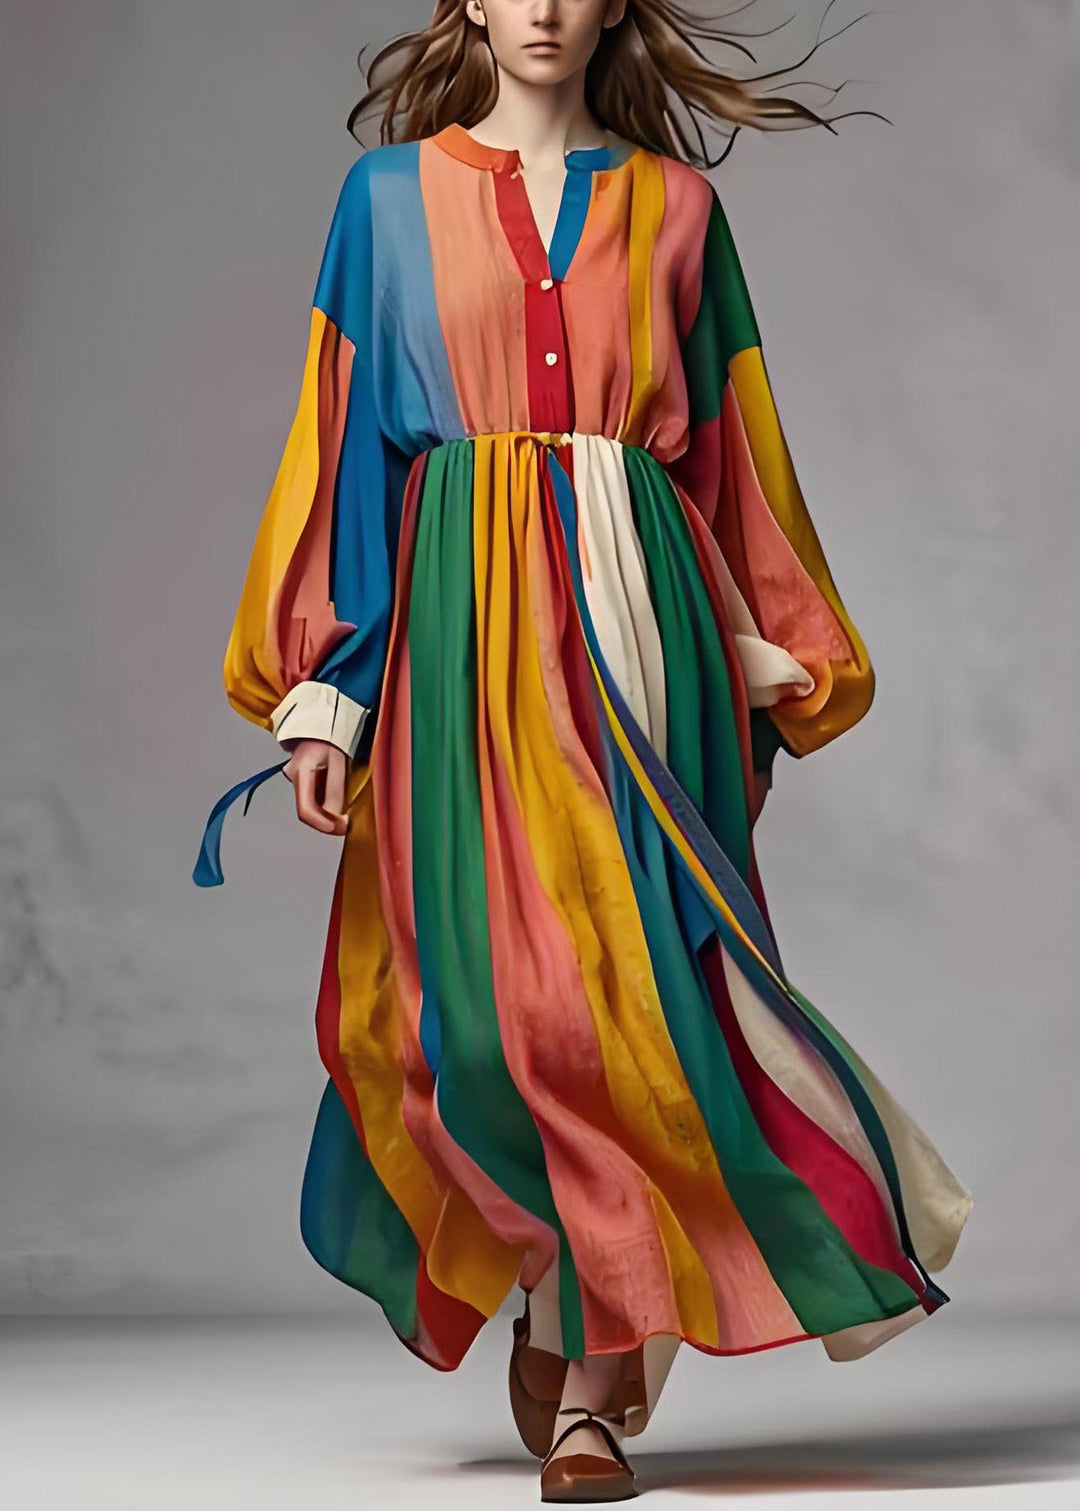 Handmade Colorblock Wrinkled Patchwork Cotton Long Dress Lantern Sleeve